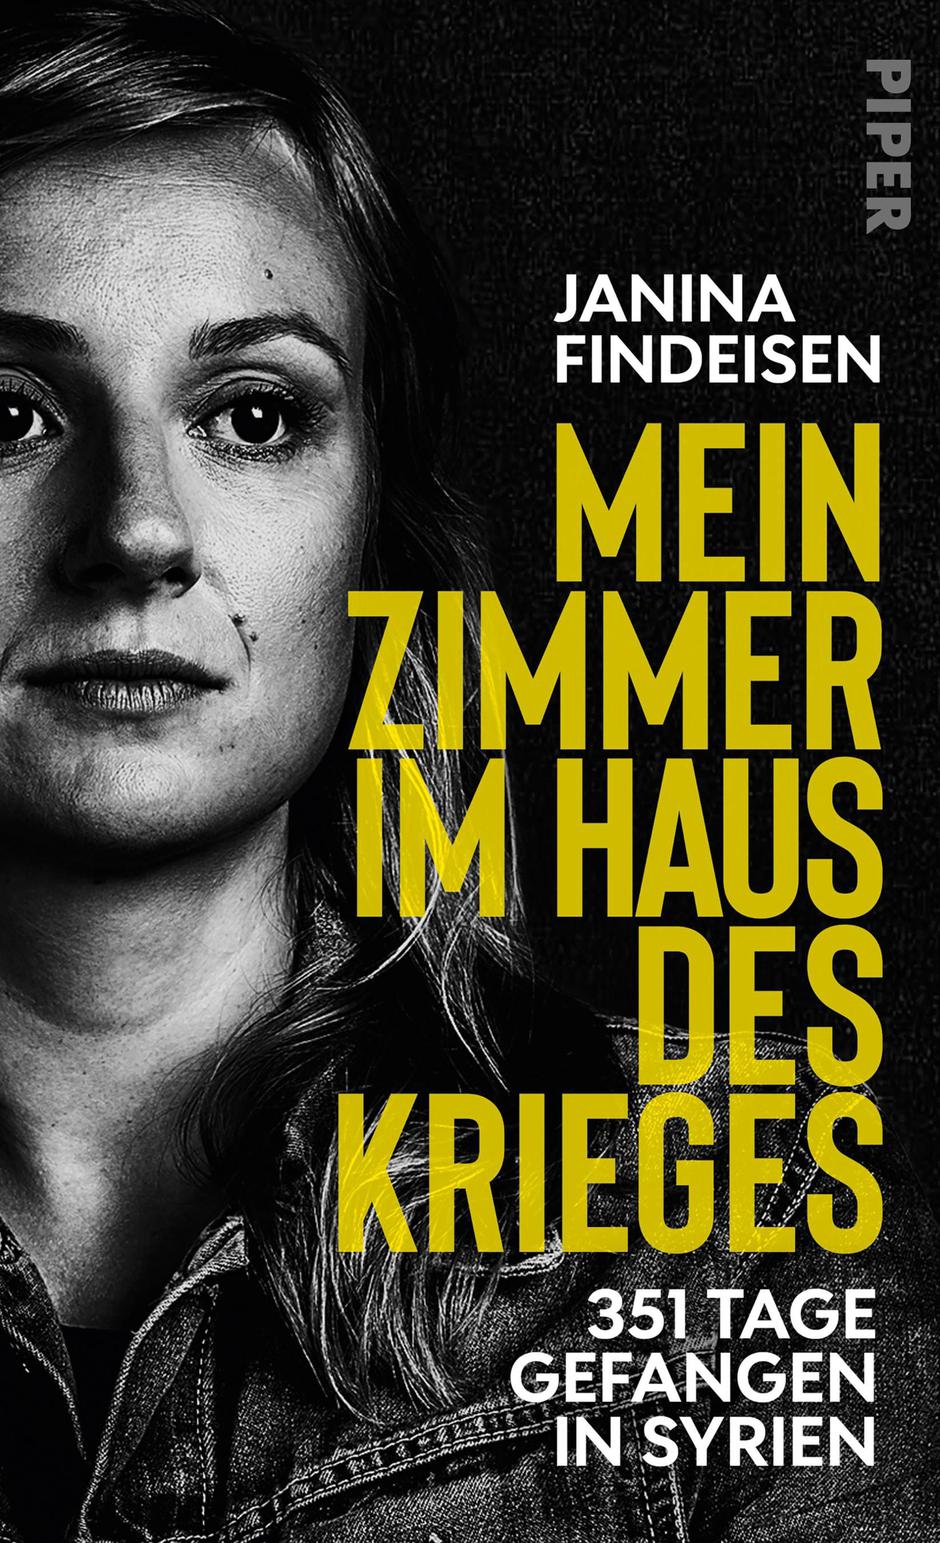 Knjiga novinarke Janine Findeisen | Author: Screenshot